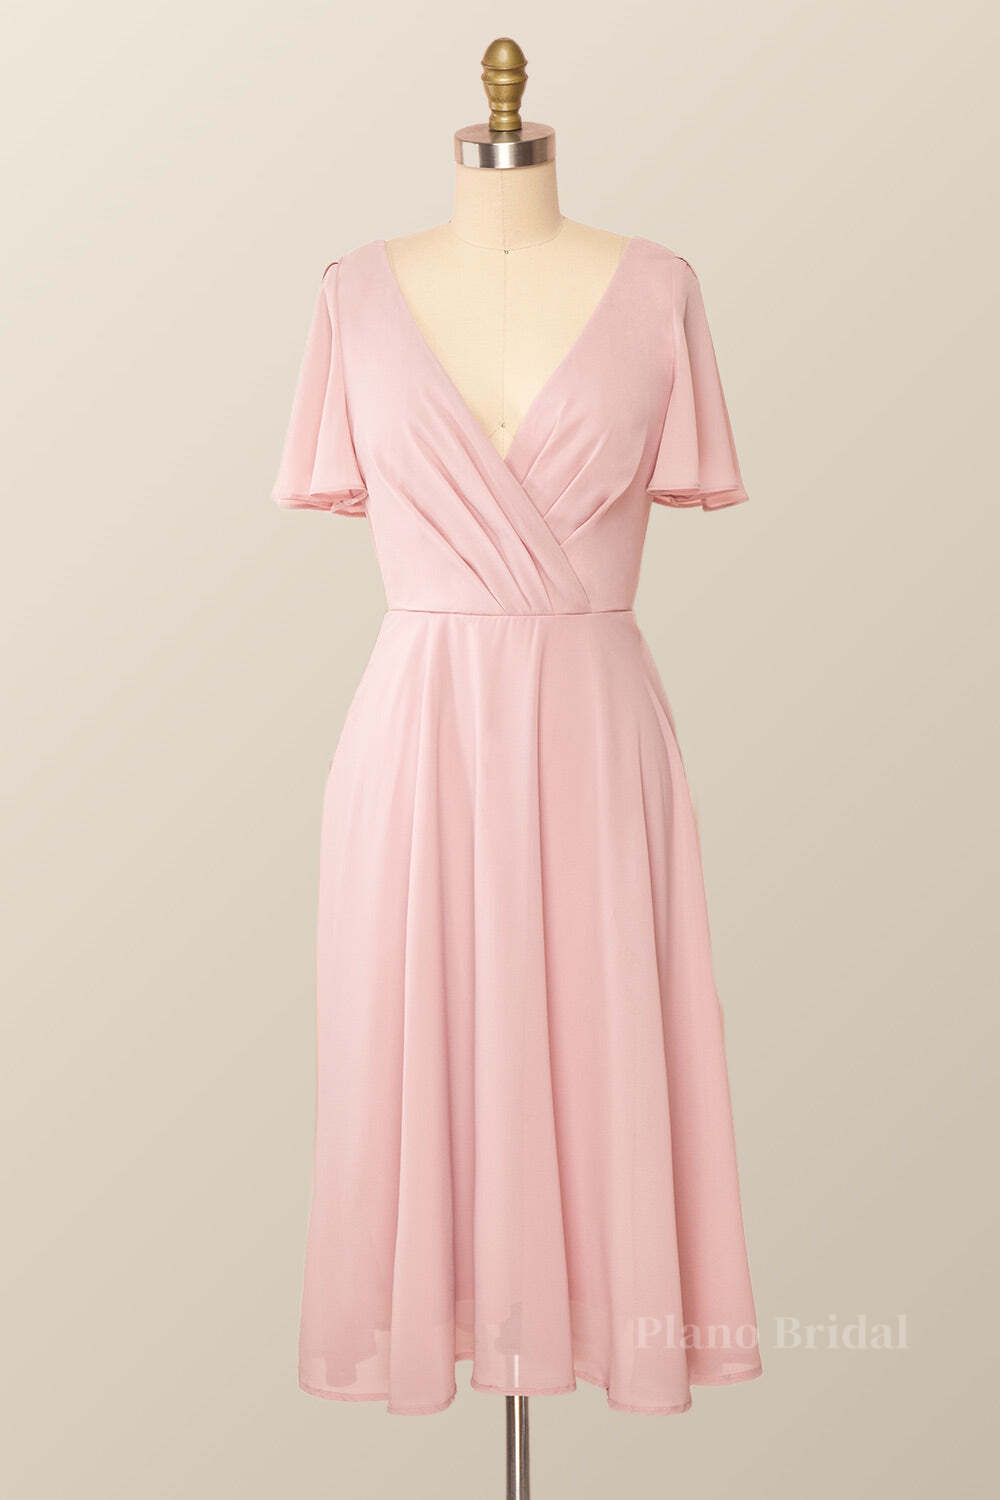 Flare Sleeves Pink Chiffon Short Party Dress